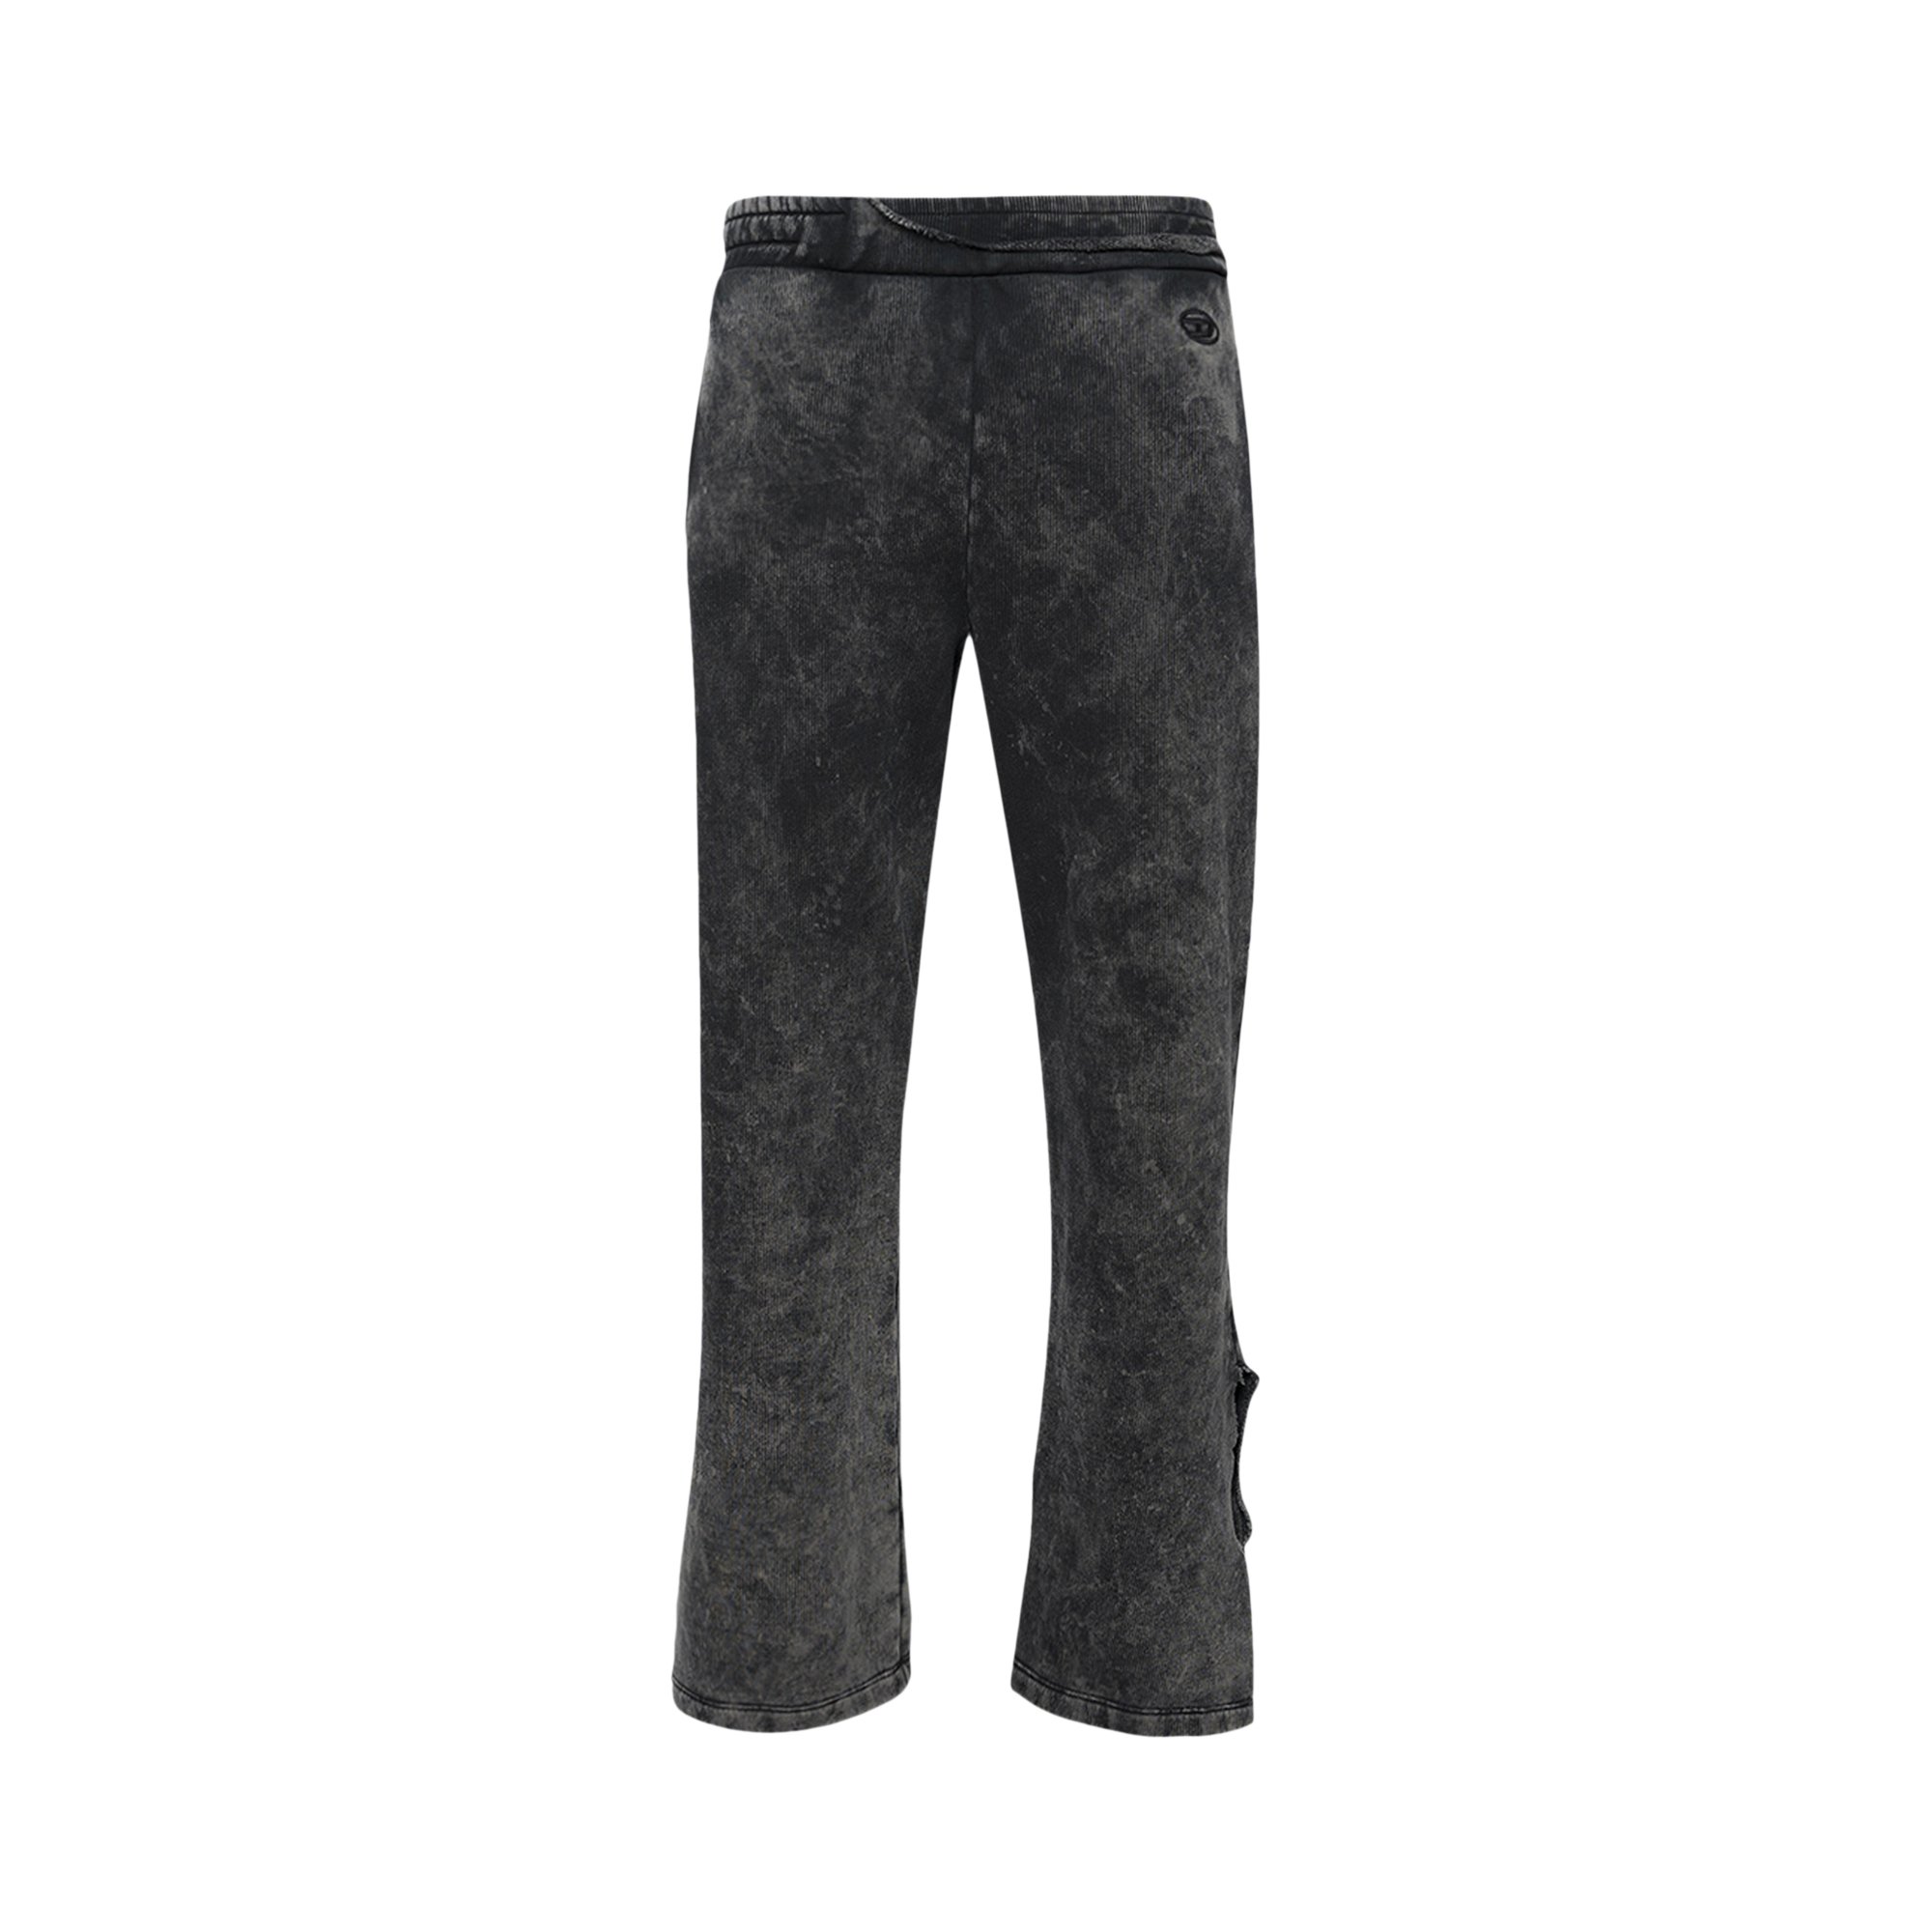 Buy Diesel P-Toppal Lounge Pants 'Black' - A07594 0BVFH 93R | GOAT